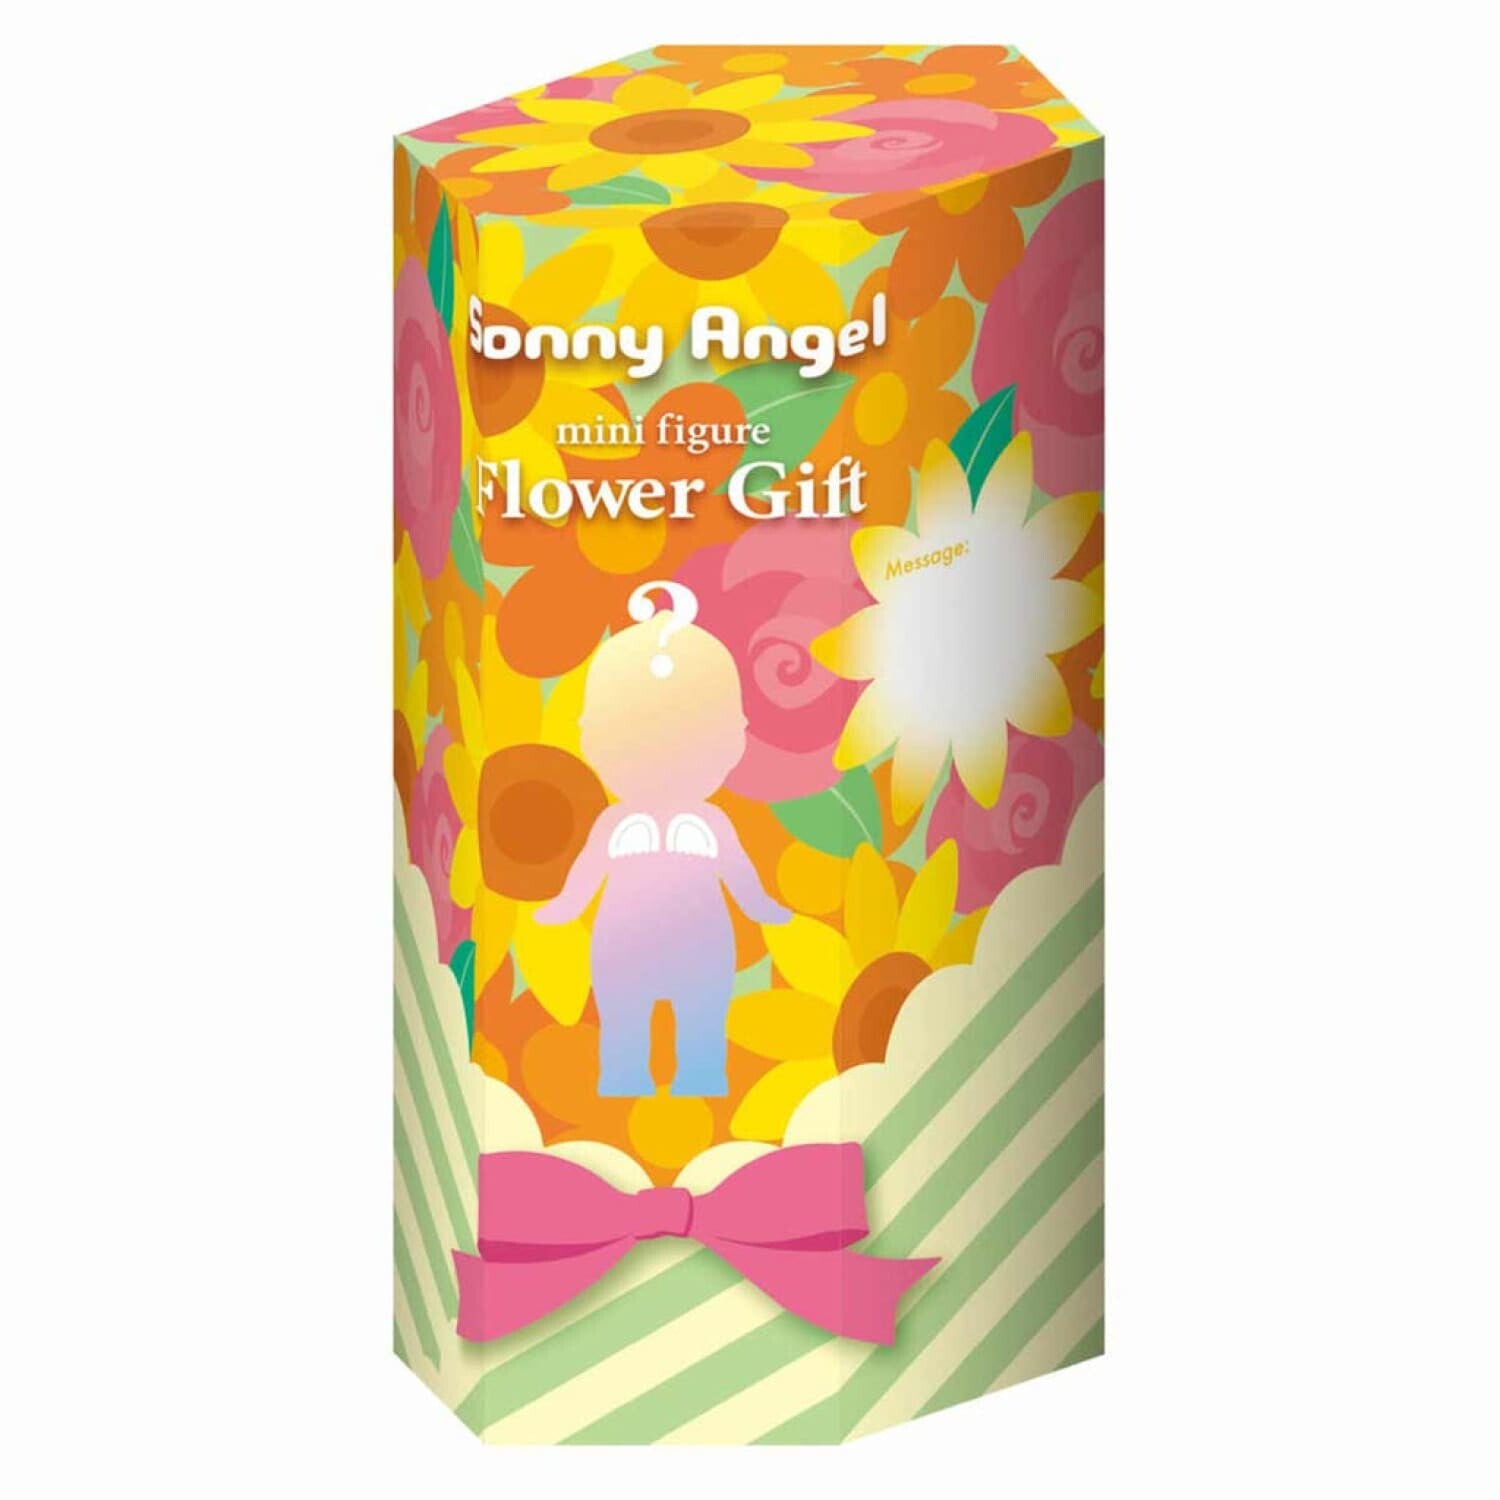 Sonny Angel - Flower Gift Blind Box - Collectible - Flower